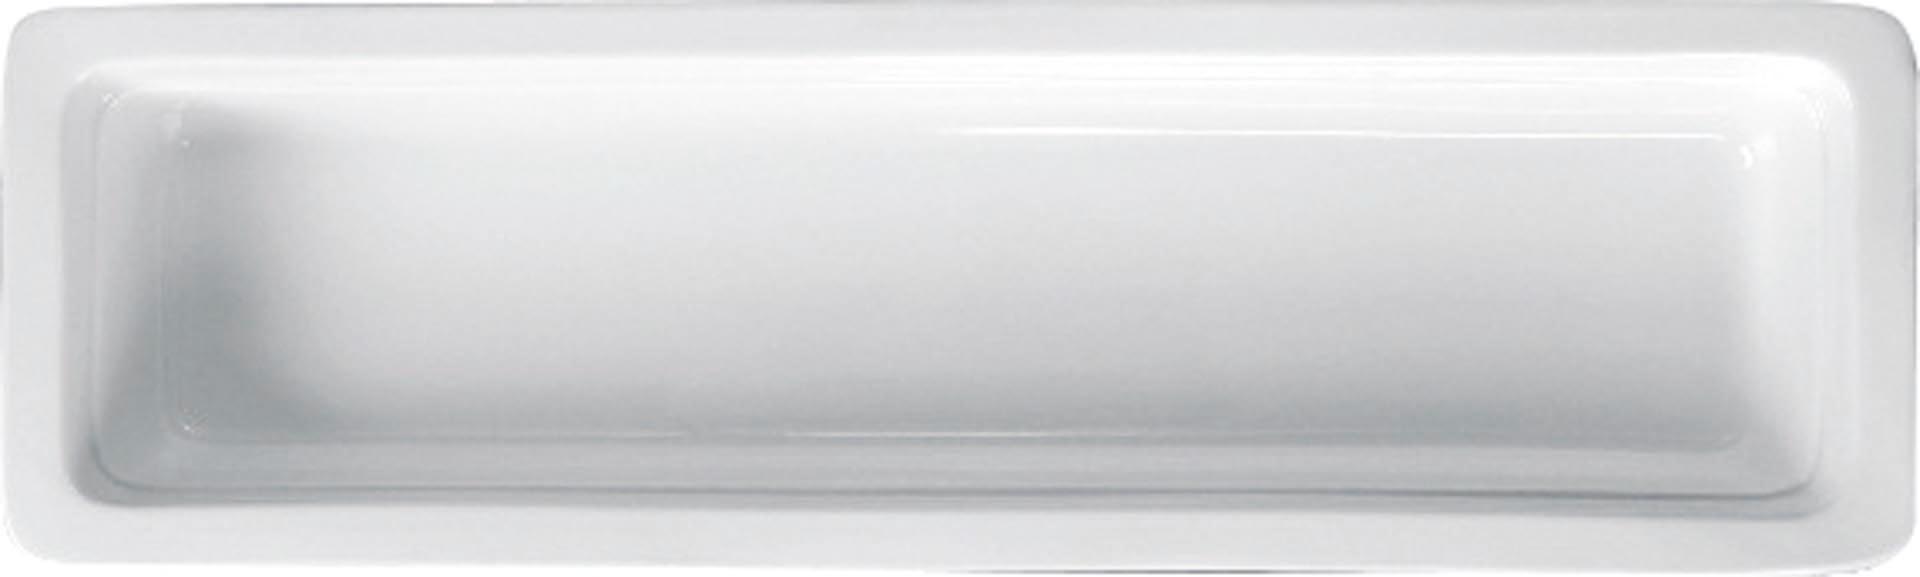 GN-Behälter Porzellan 2/4 65mm tief